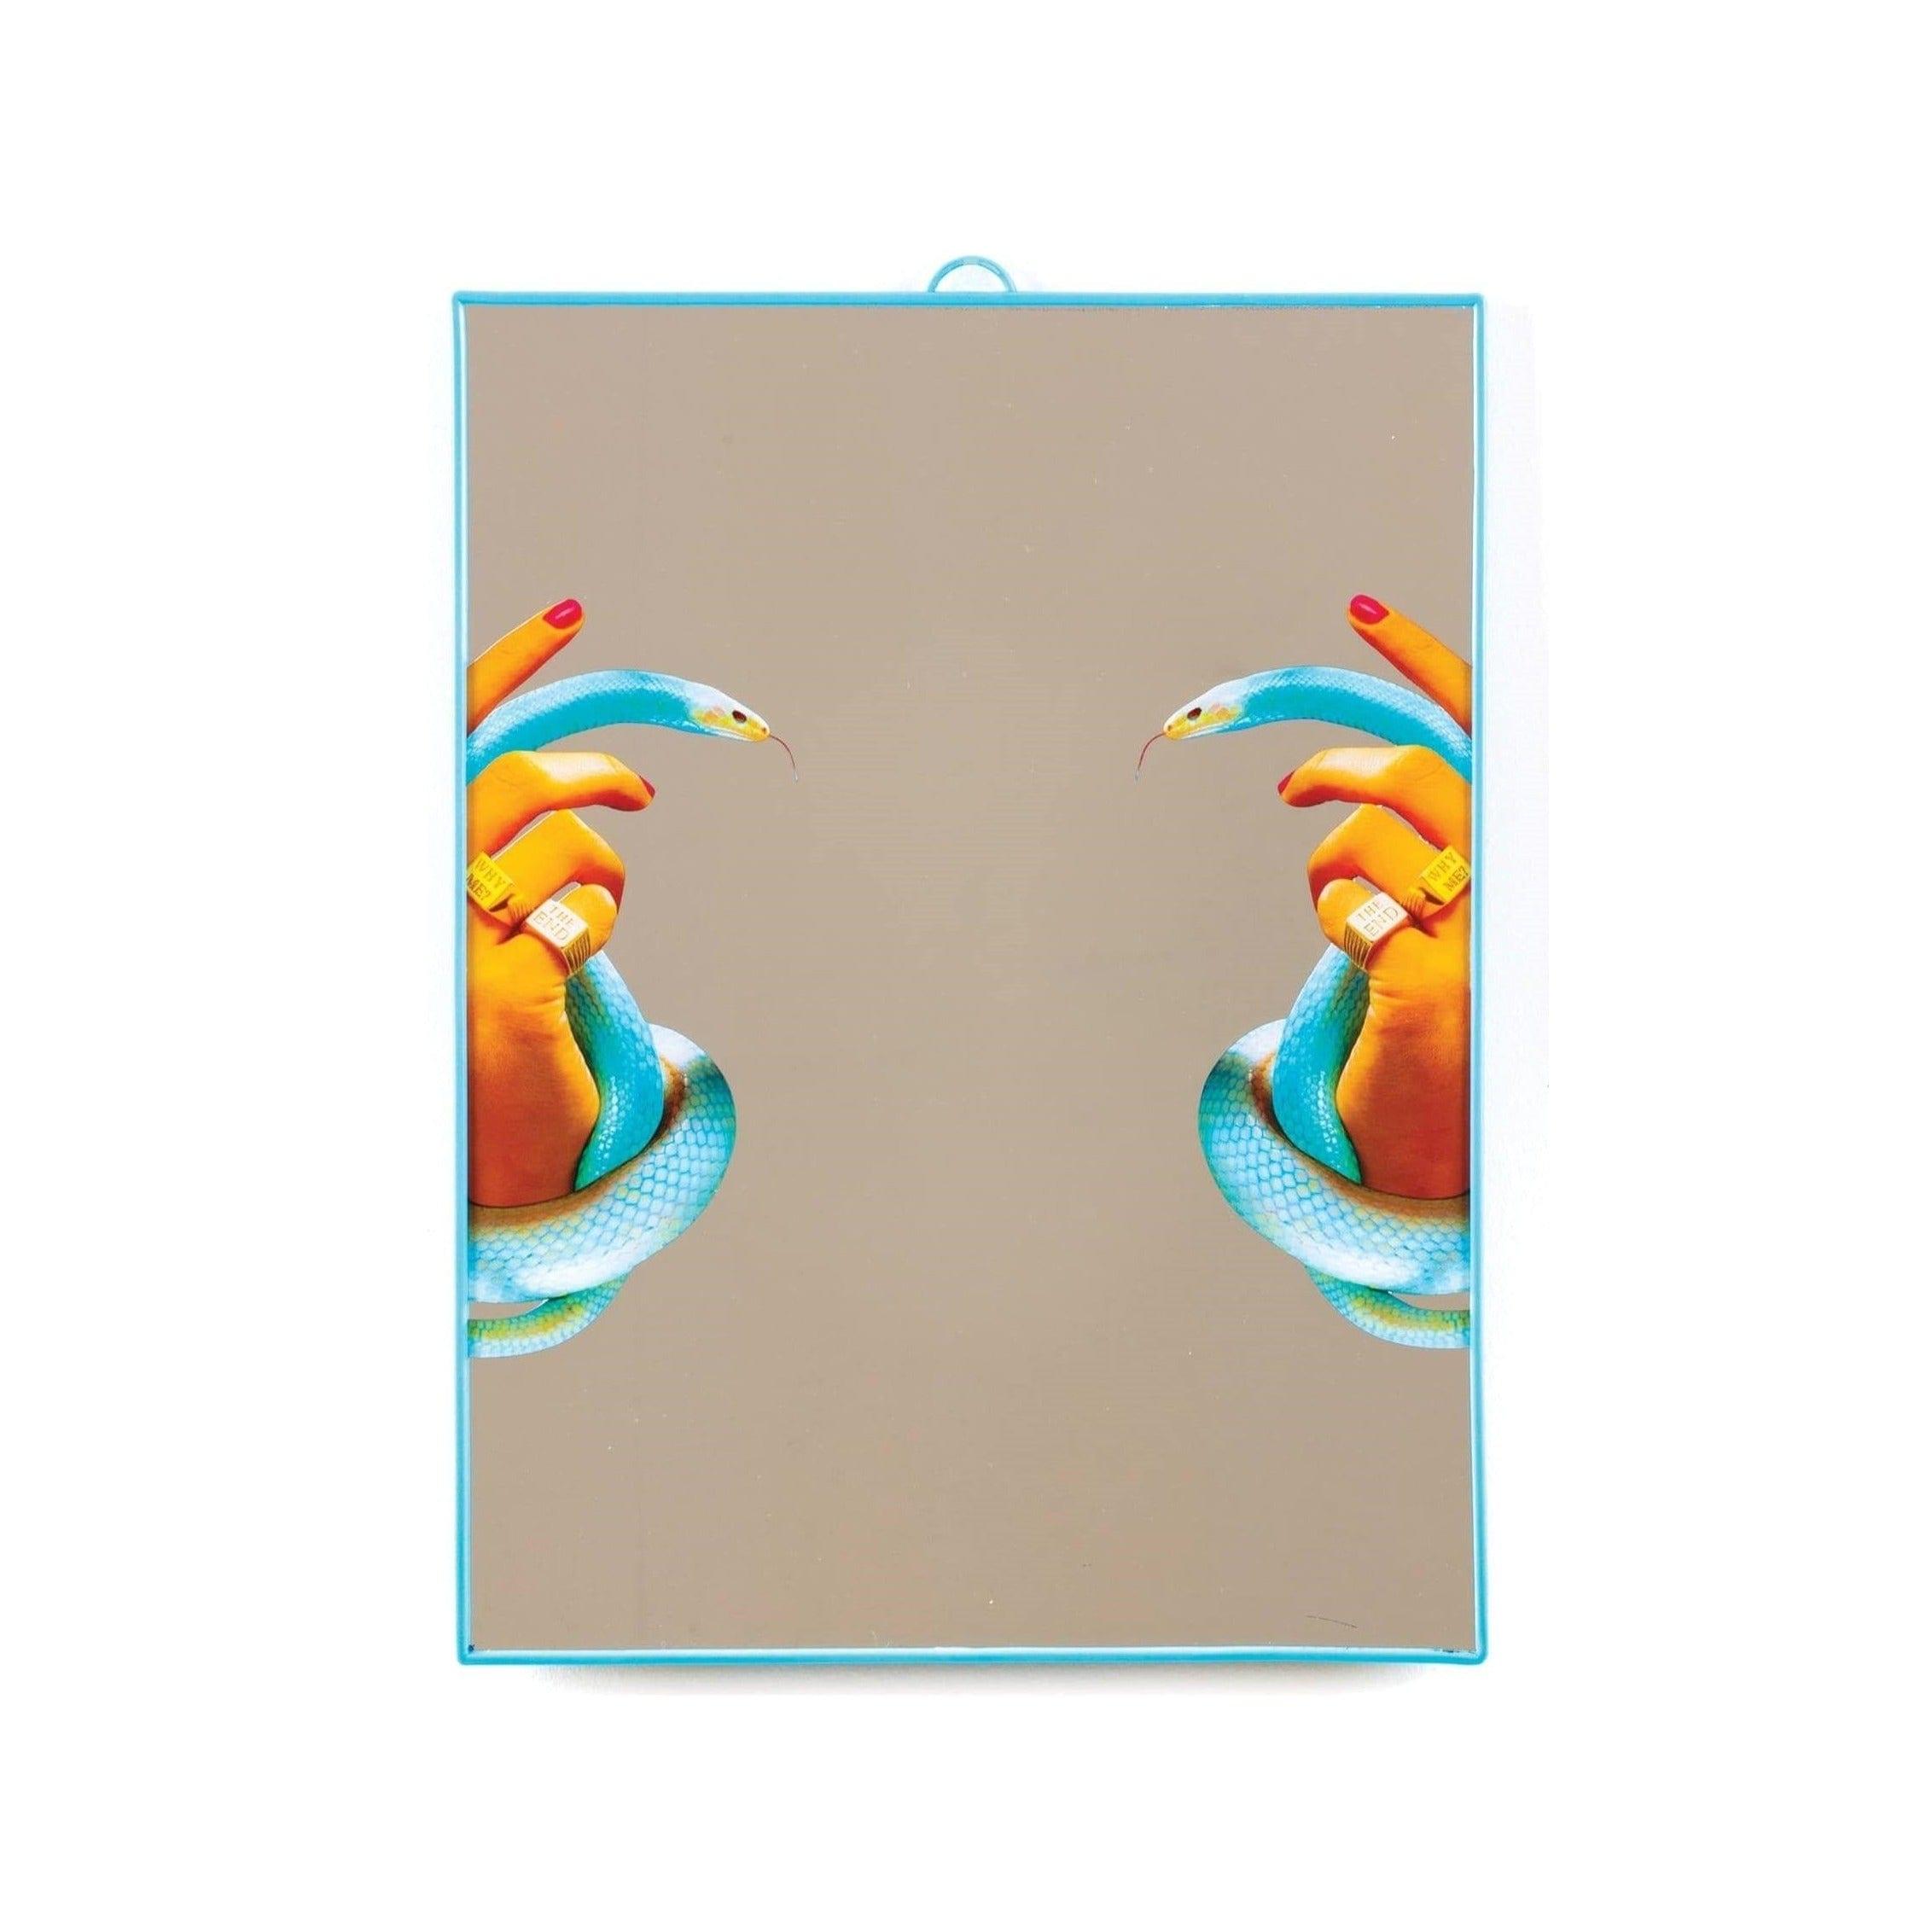 Lustro HANDS WITH SNAKES w błękitnej ramce, Seletti, Eye on Design